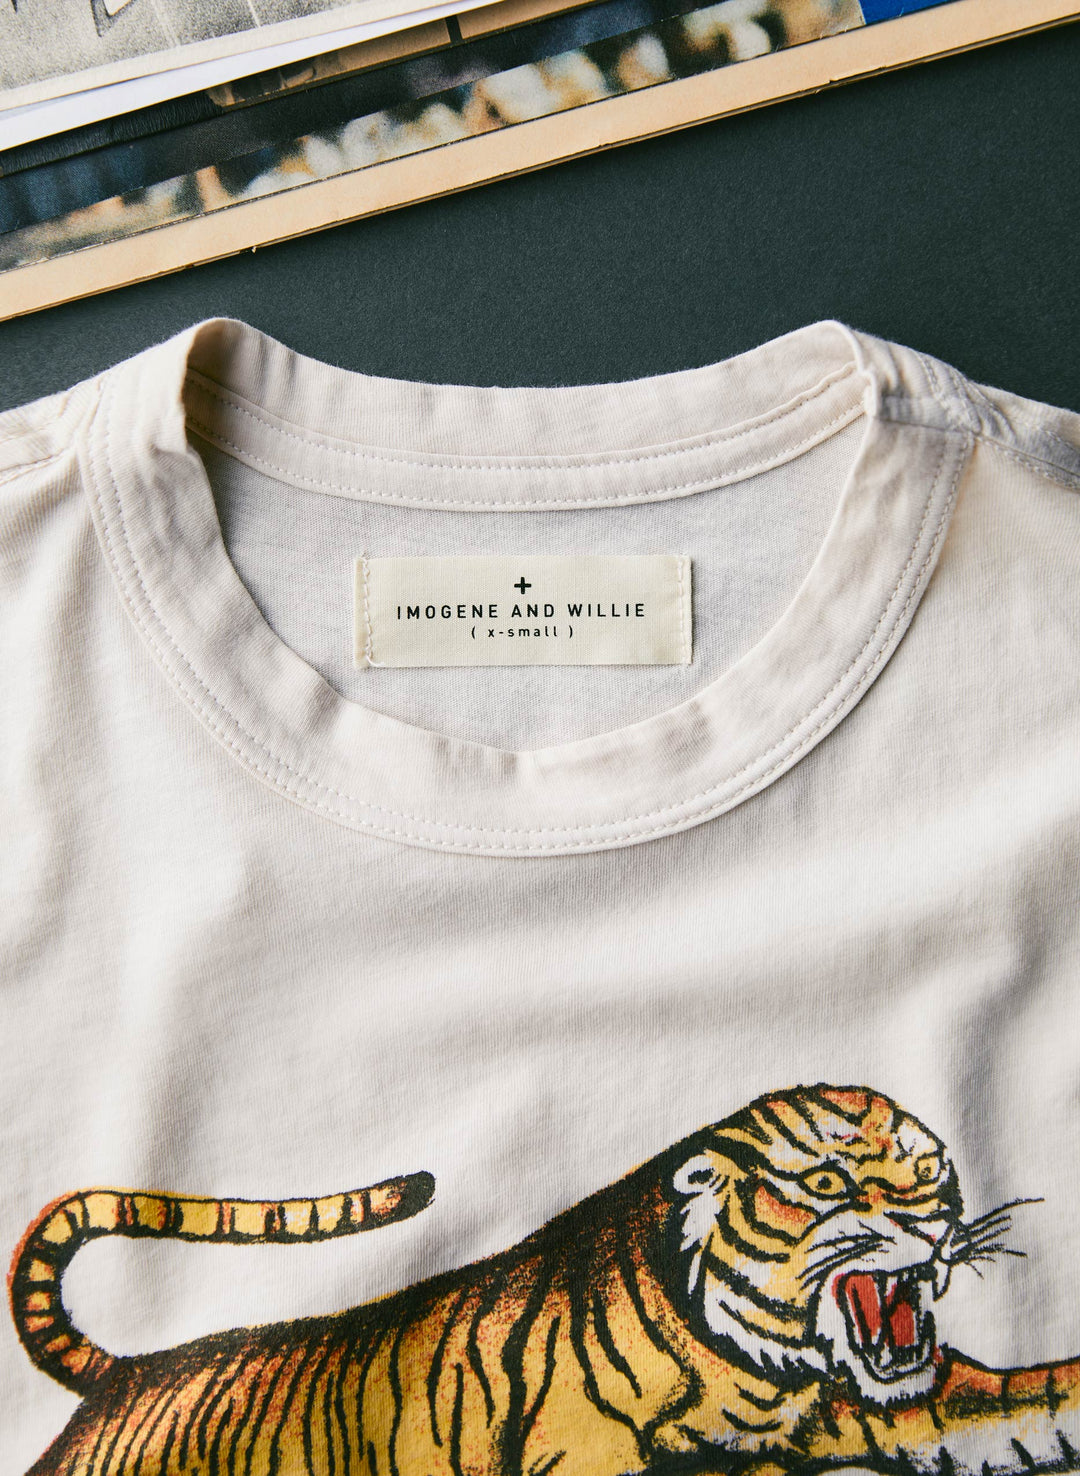 White, Siberian tiger, Product, Bengal tiger, Sleeve, Textile, Orange, Yellow, Grey, Jersey